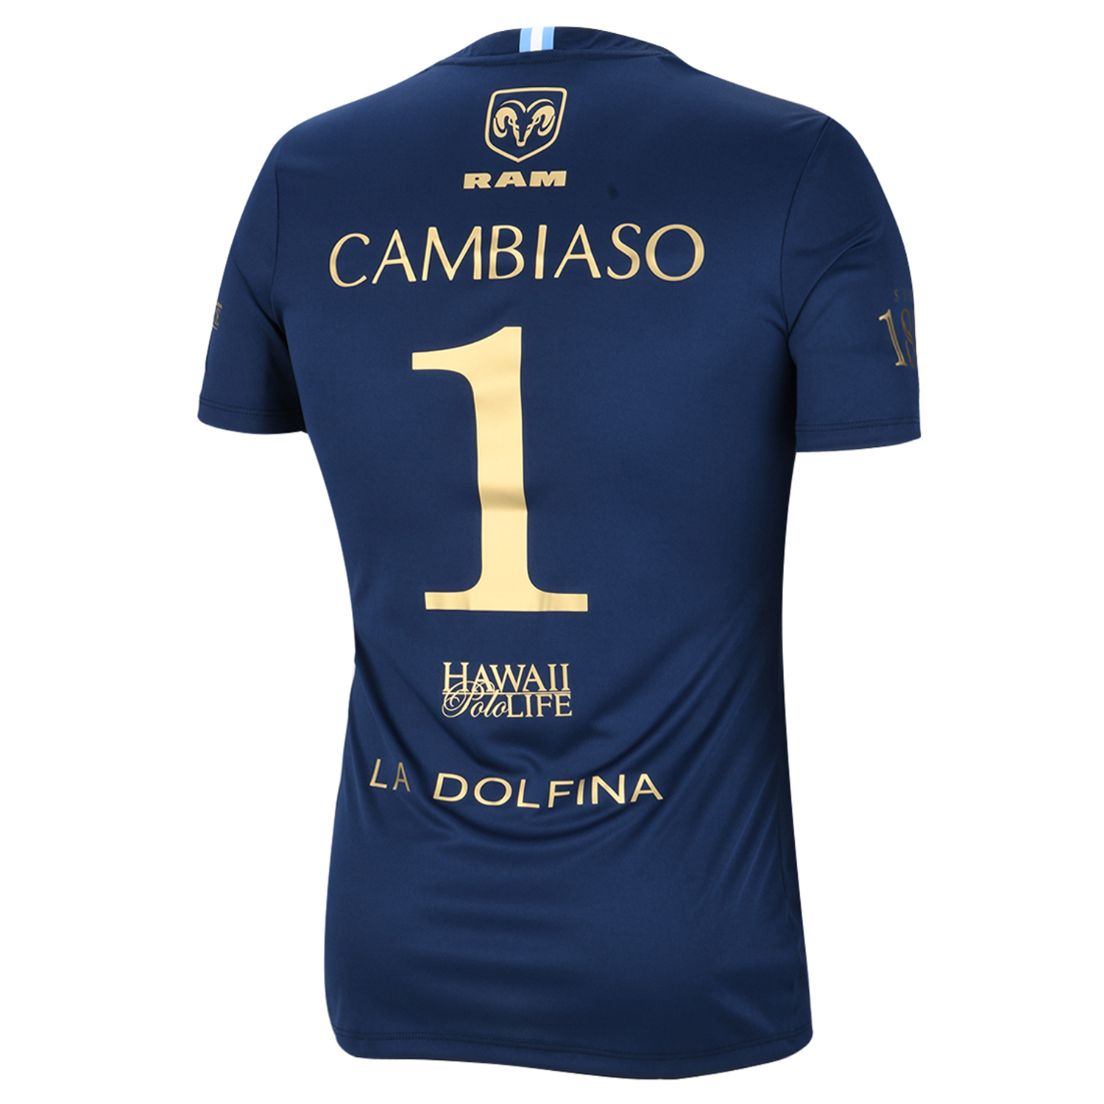 Camiseta Under Armour La Dolfina Authentic Cambiasso - Open Sports